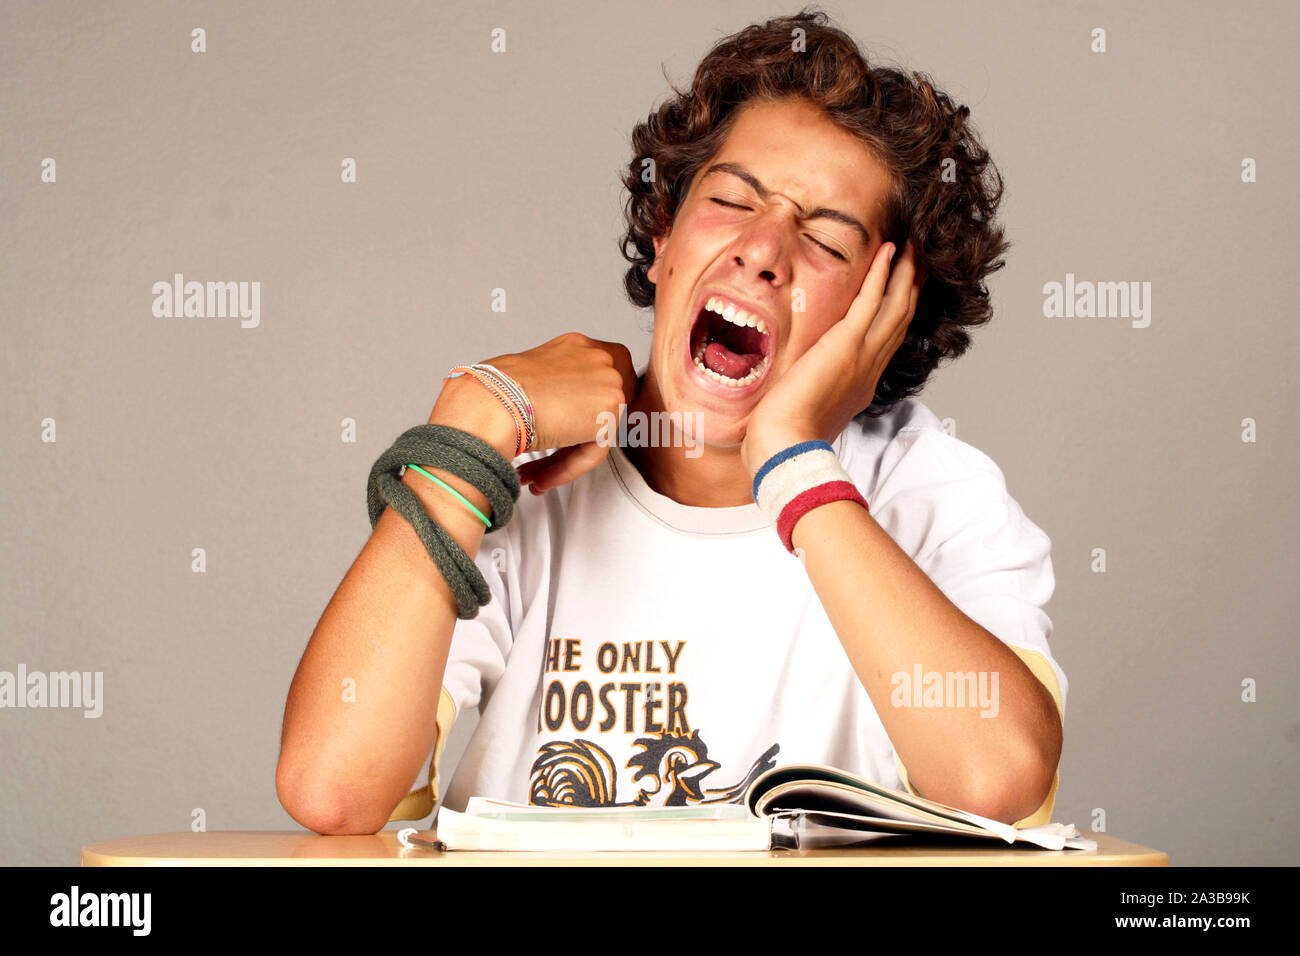 secondary school, teenaged student yawning Stock Photo